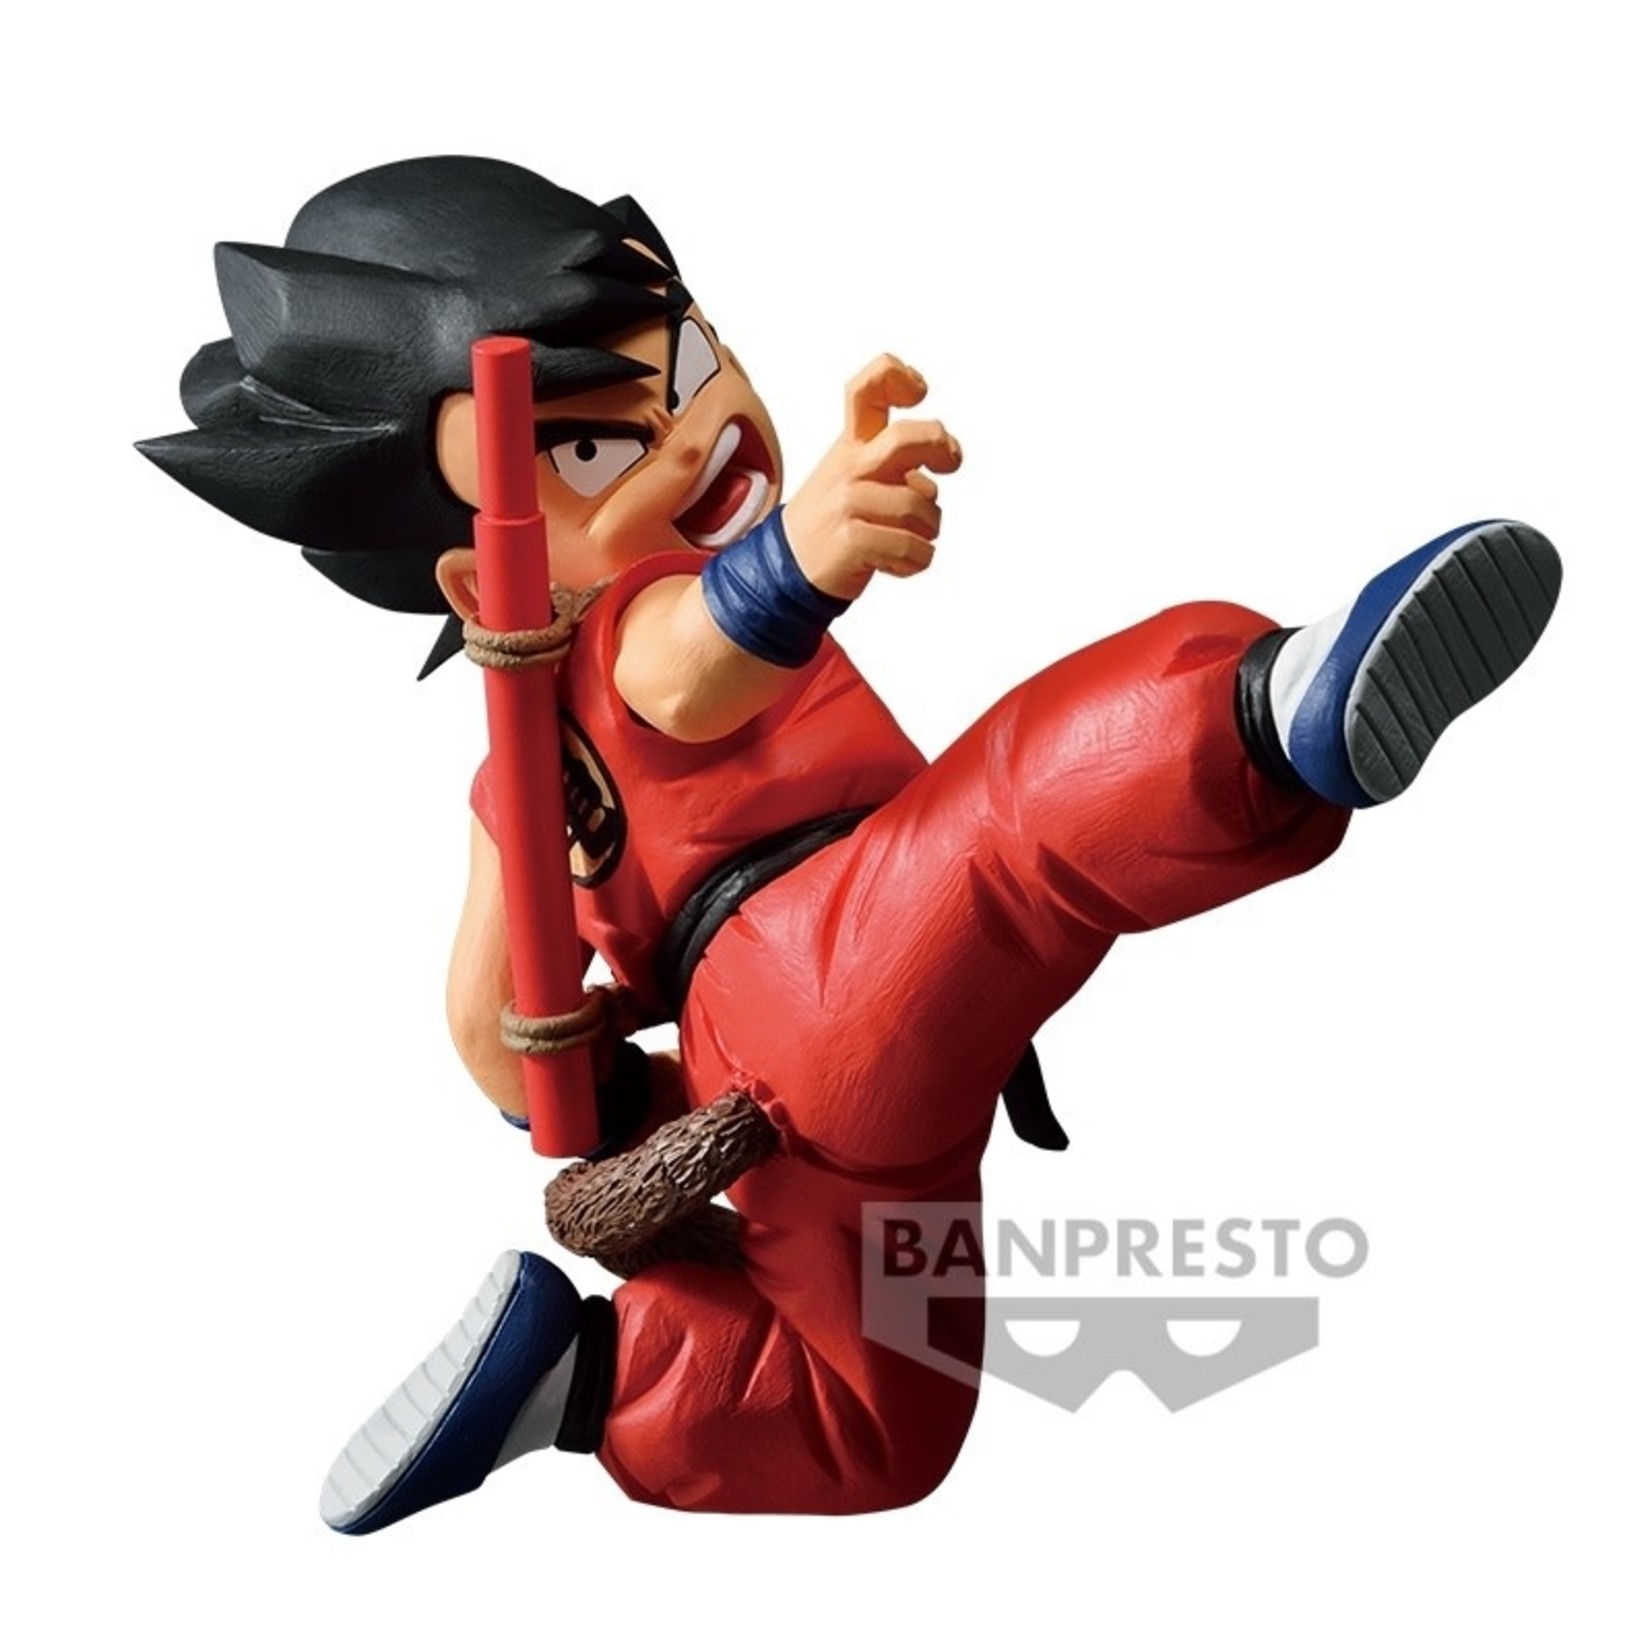 Banpresto Banpresto - DragonBall Match Makers - Son Goku